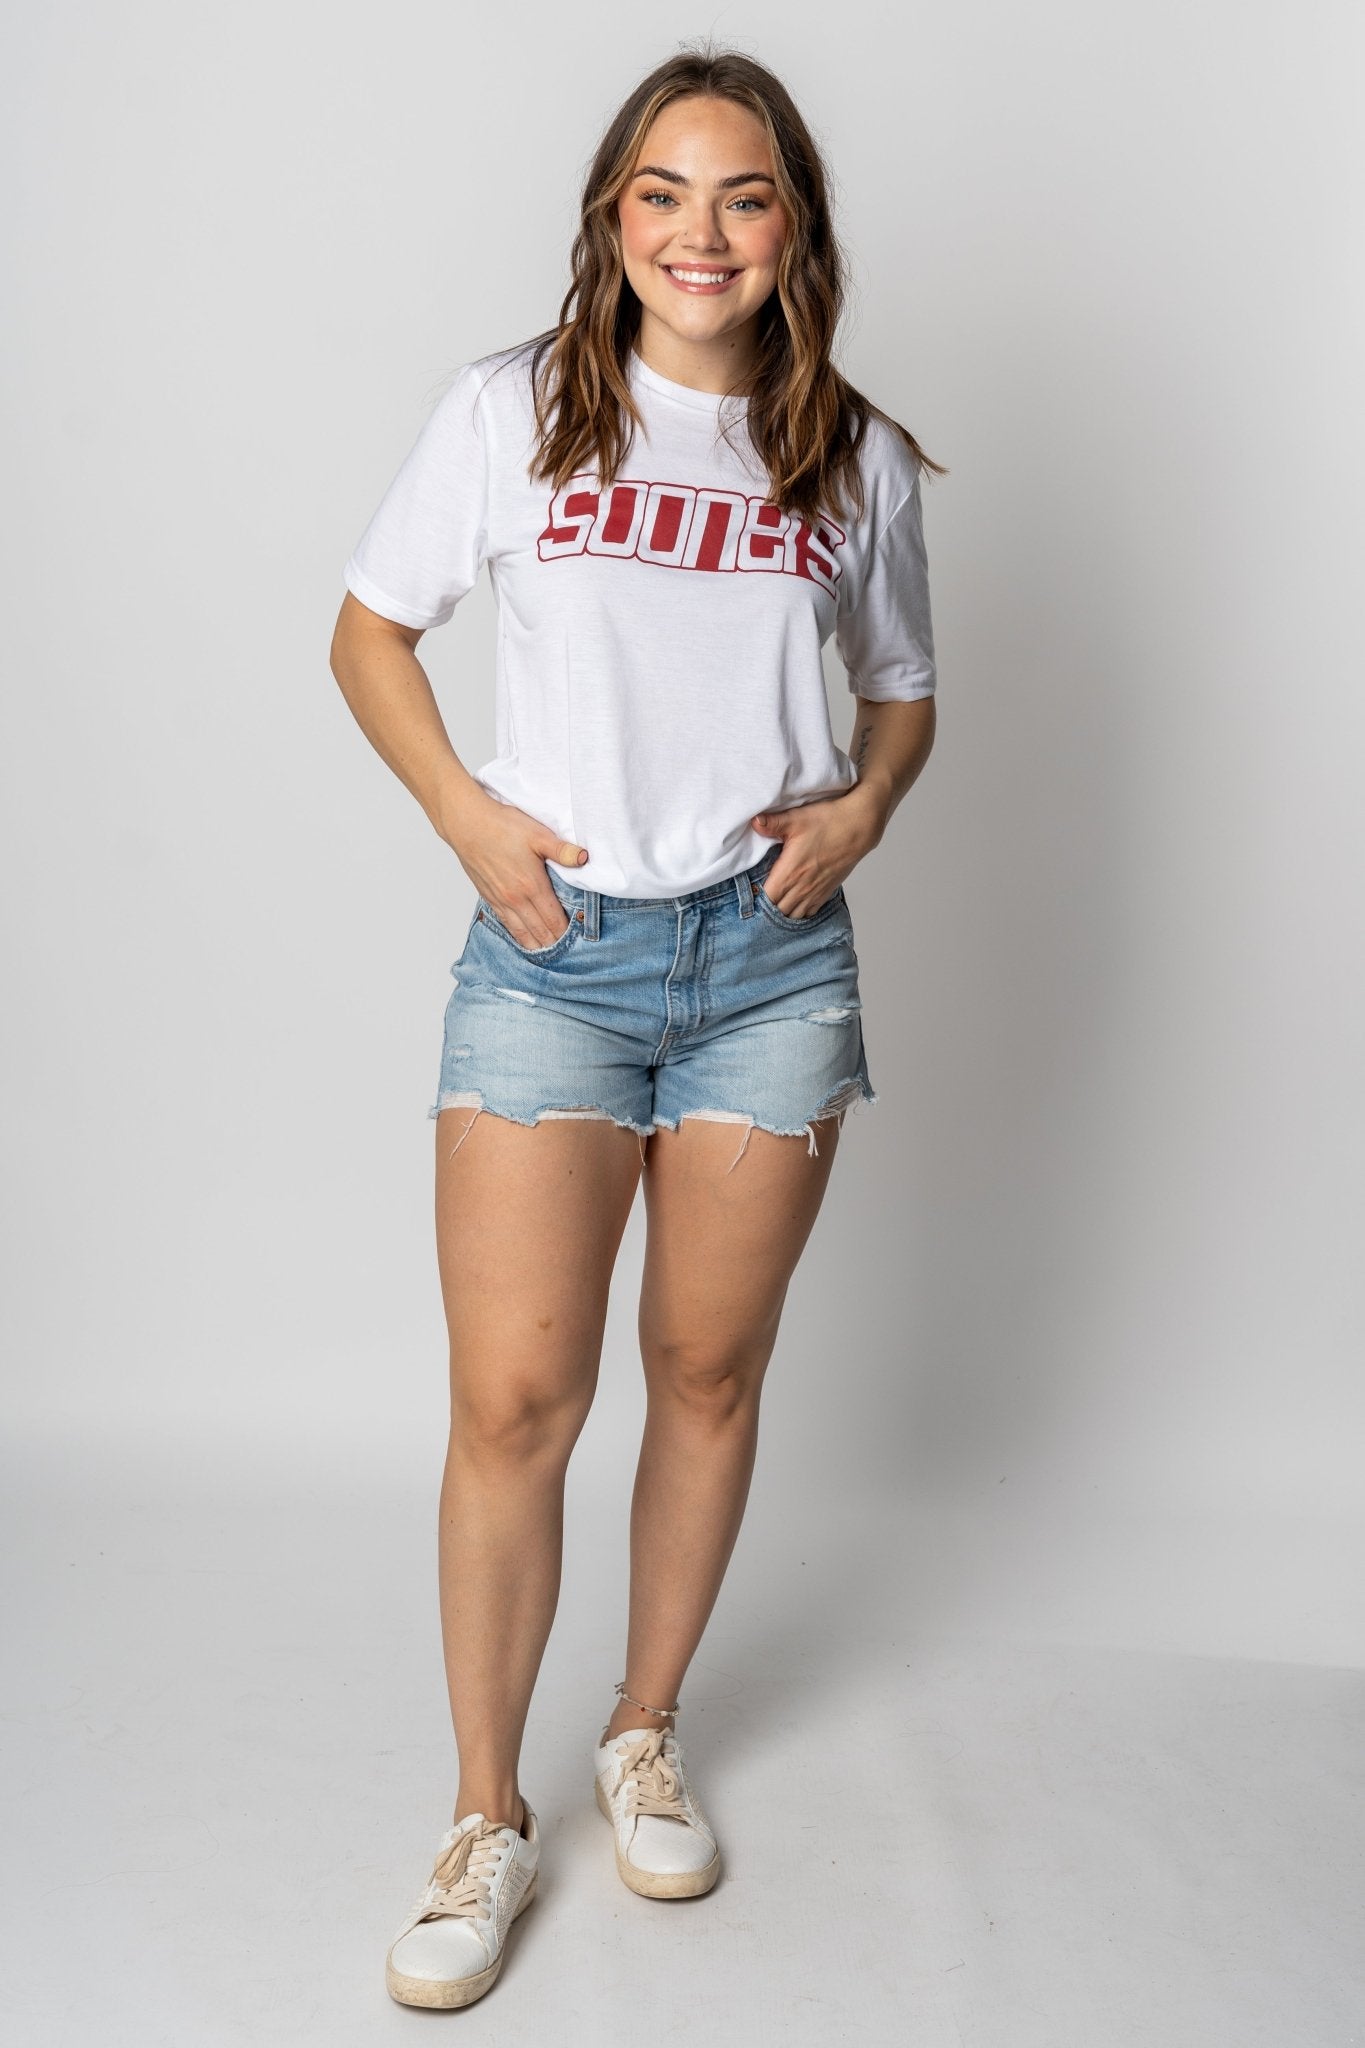 OU OU Sooners retro block unisex short sleeve t-shirt t-shirt | Lush Fashion Lounge Trendy Oklahoma University Sooners Apparel & Cute Gameday T-Shirts